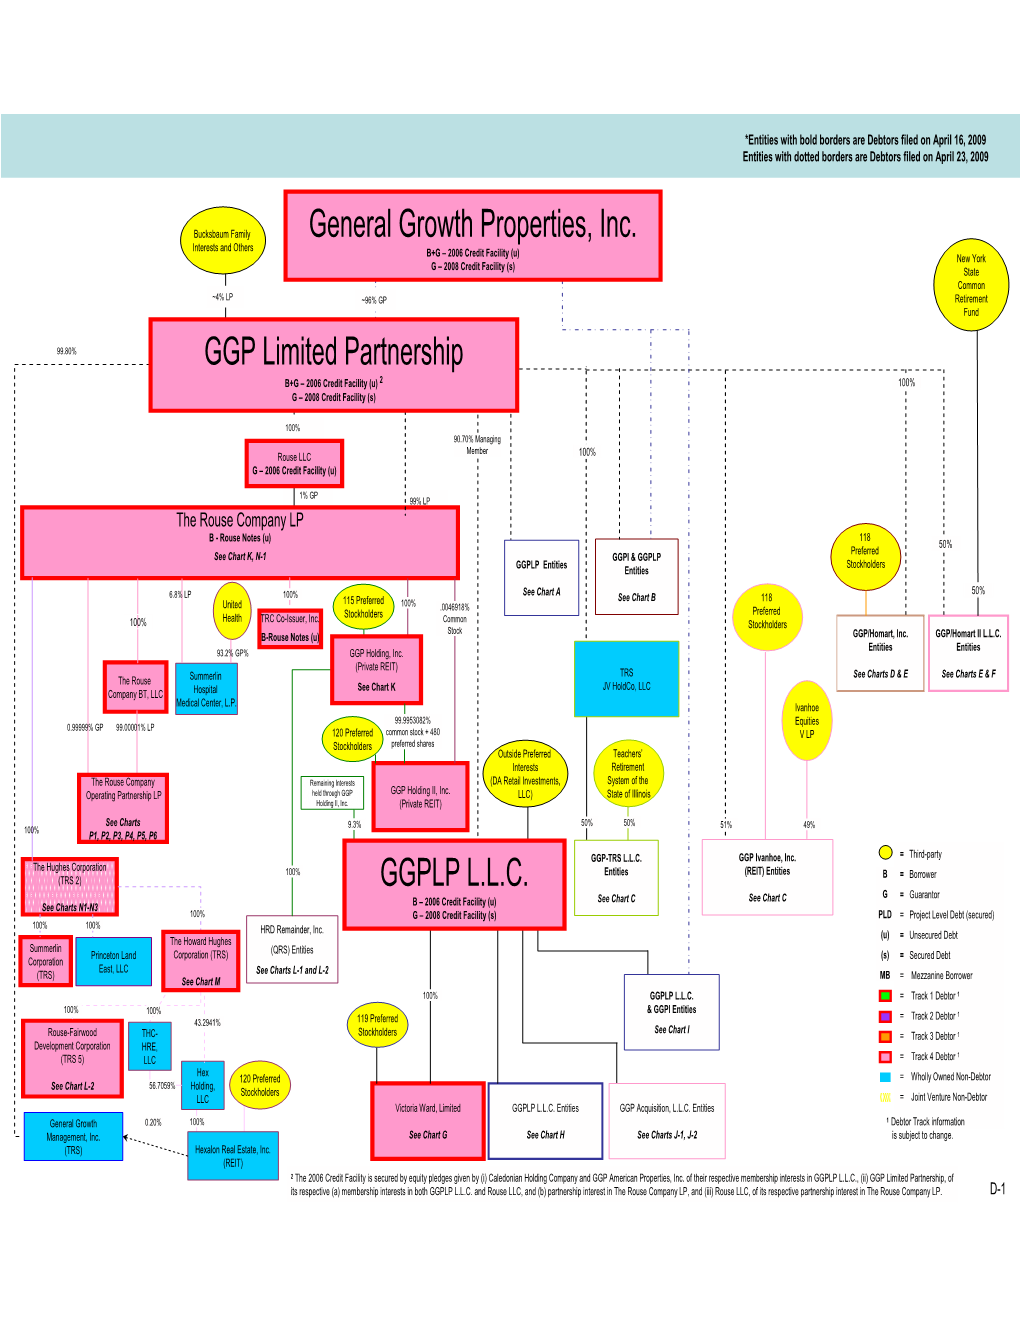 General Growth Properties, Inc. GGP Limited Partnership GGPLP L.L.C